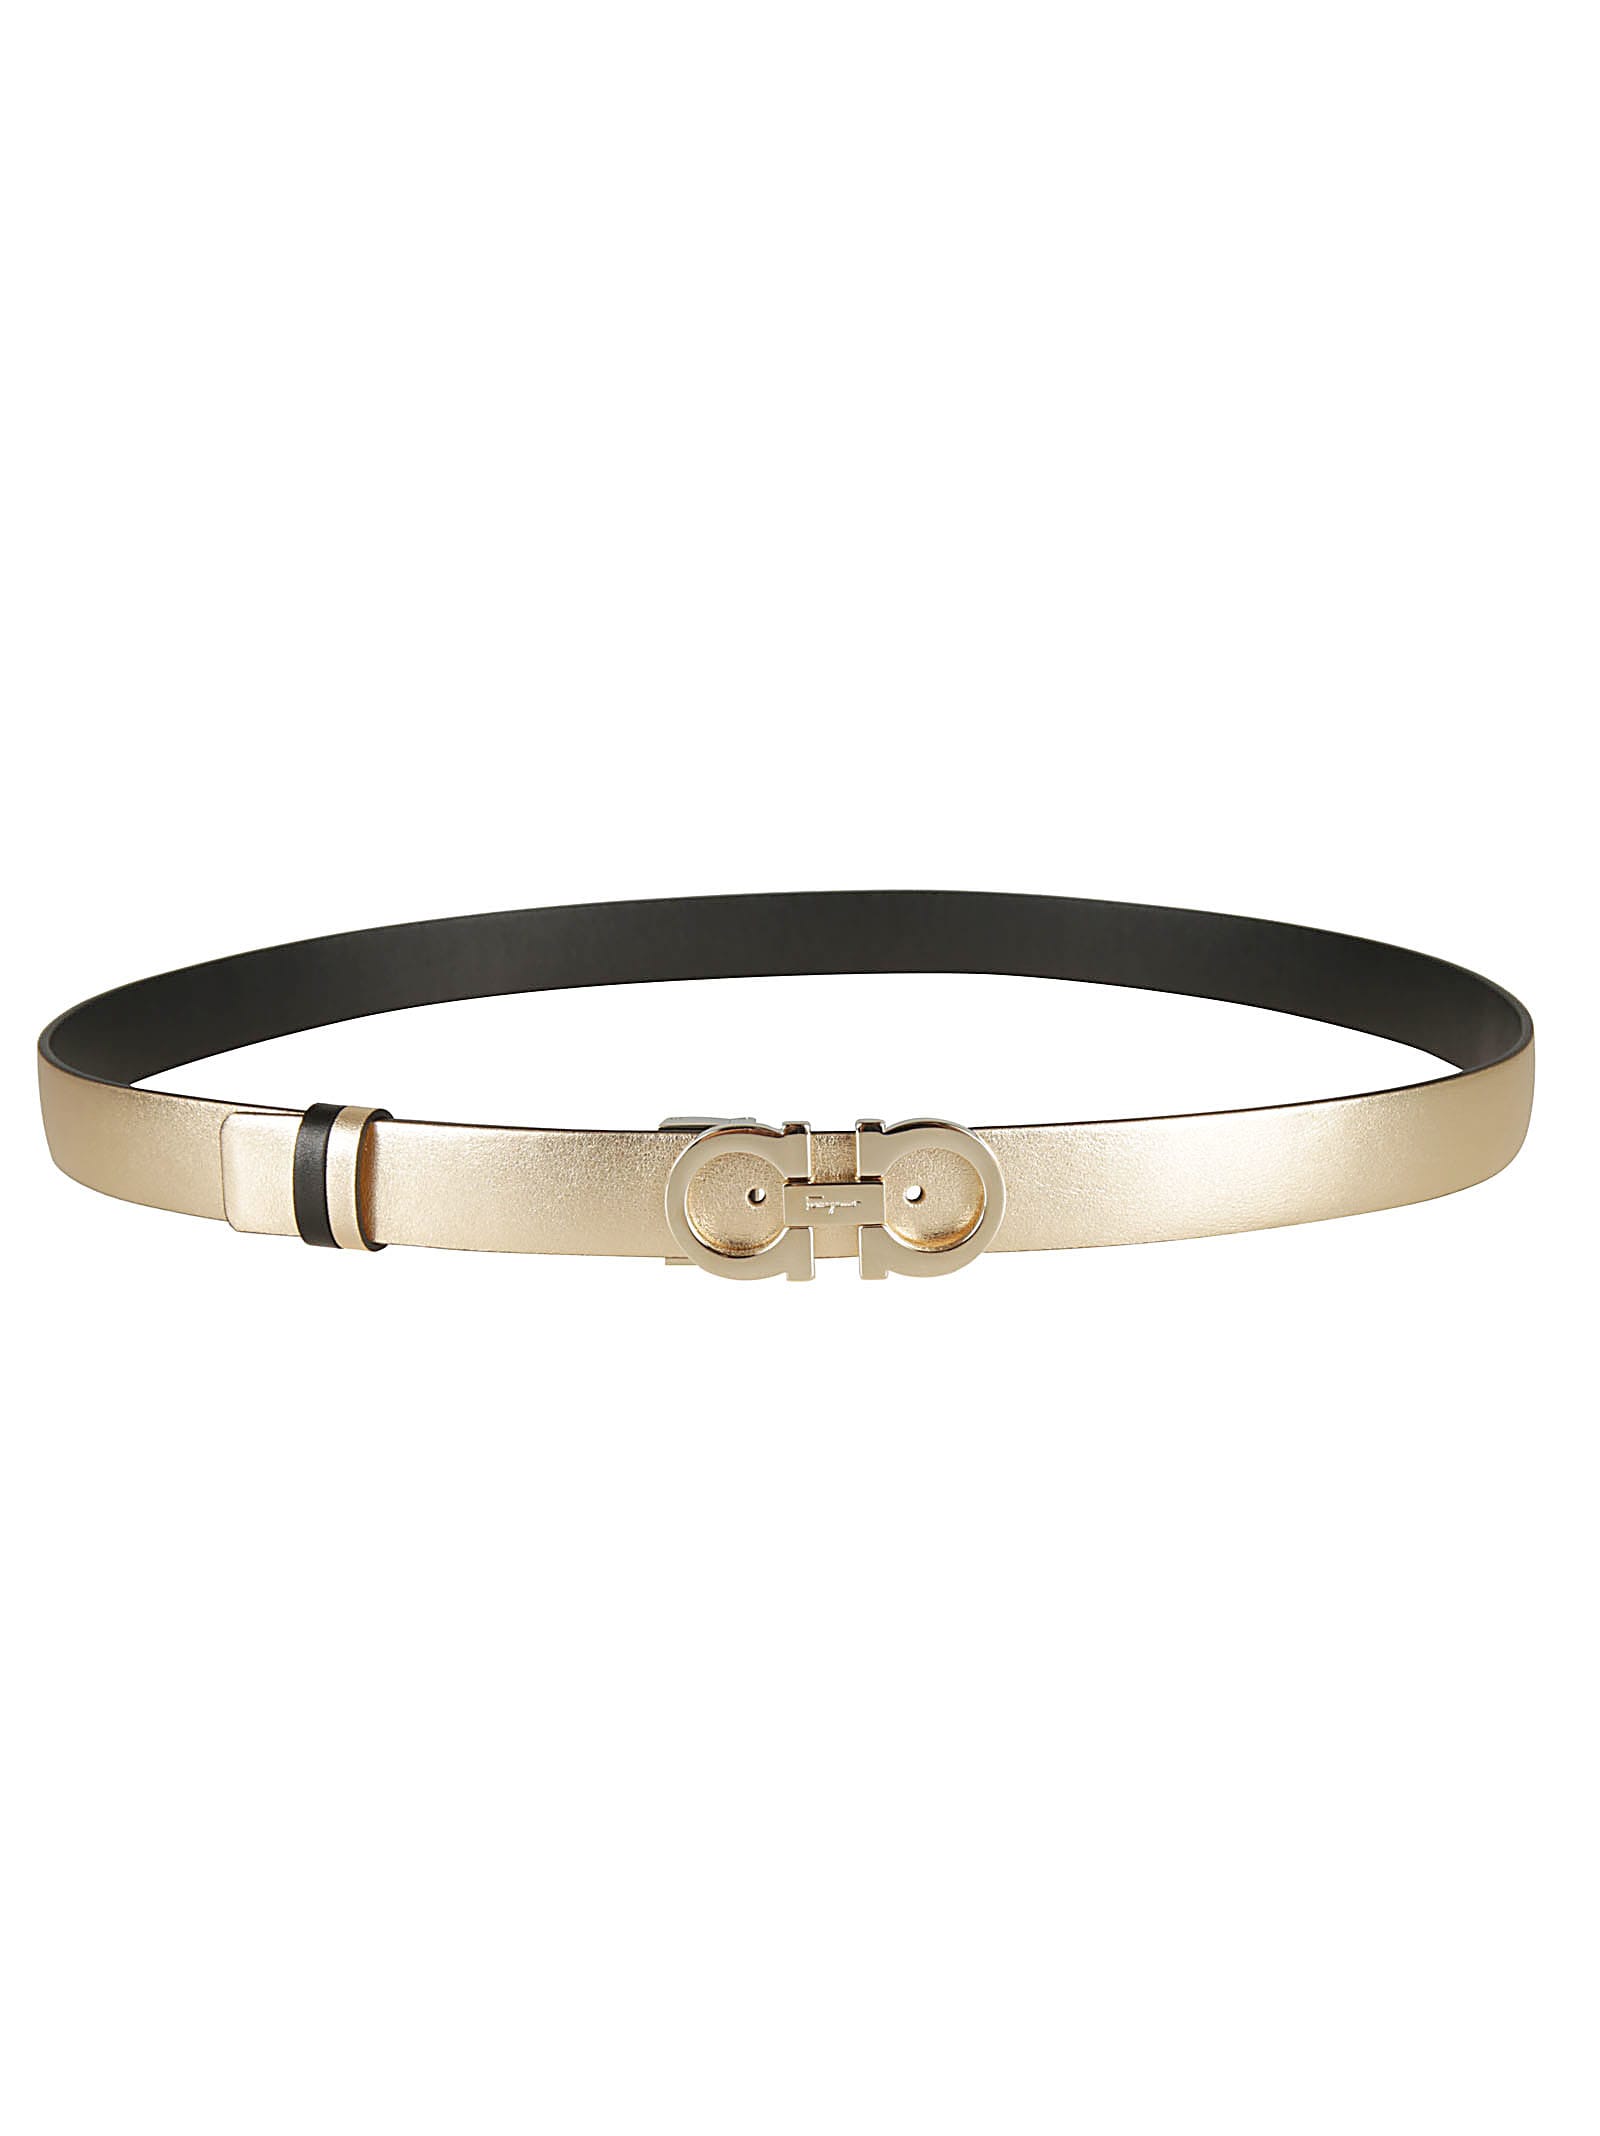 Salvatore Ferragamo Logo Buckled Belt In Gold/black | ModeSens